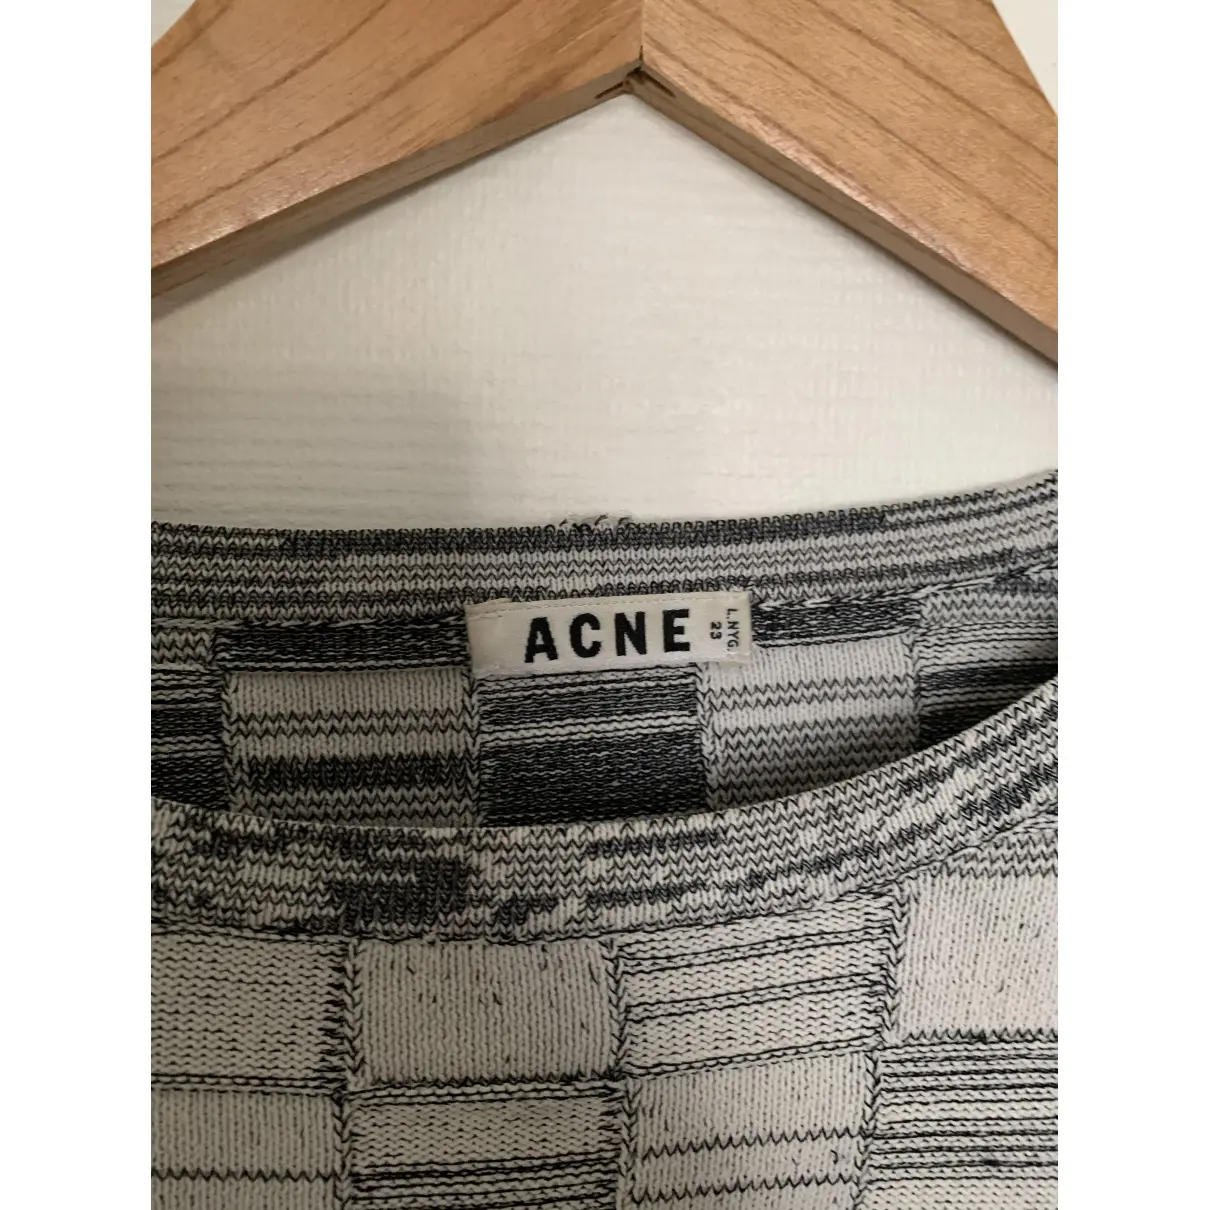 Buy Acne Studios Grey Cotton Knitwear & Sweatshirt online